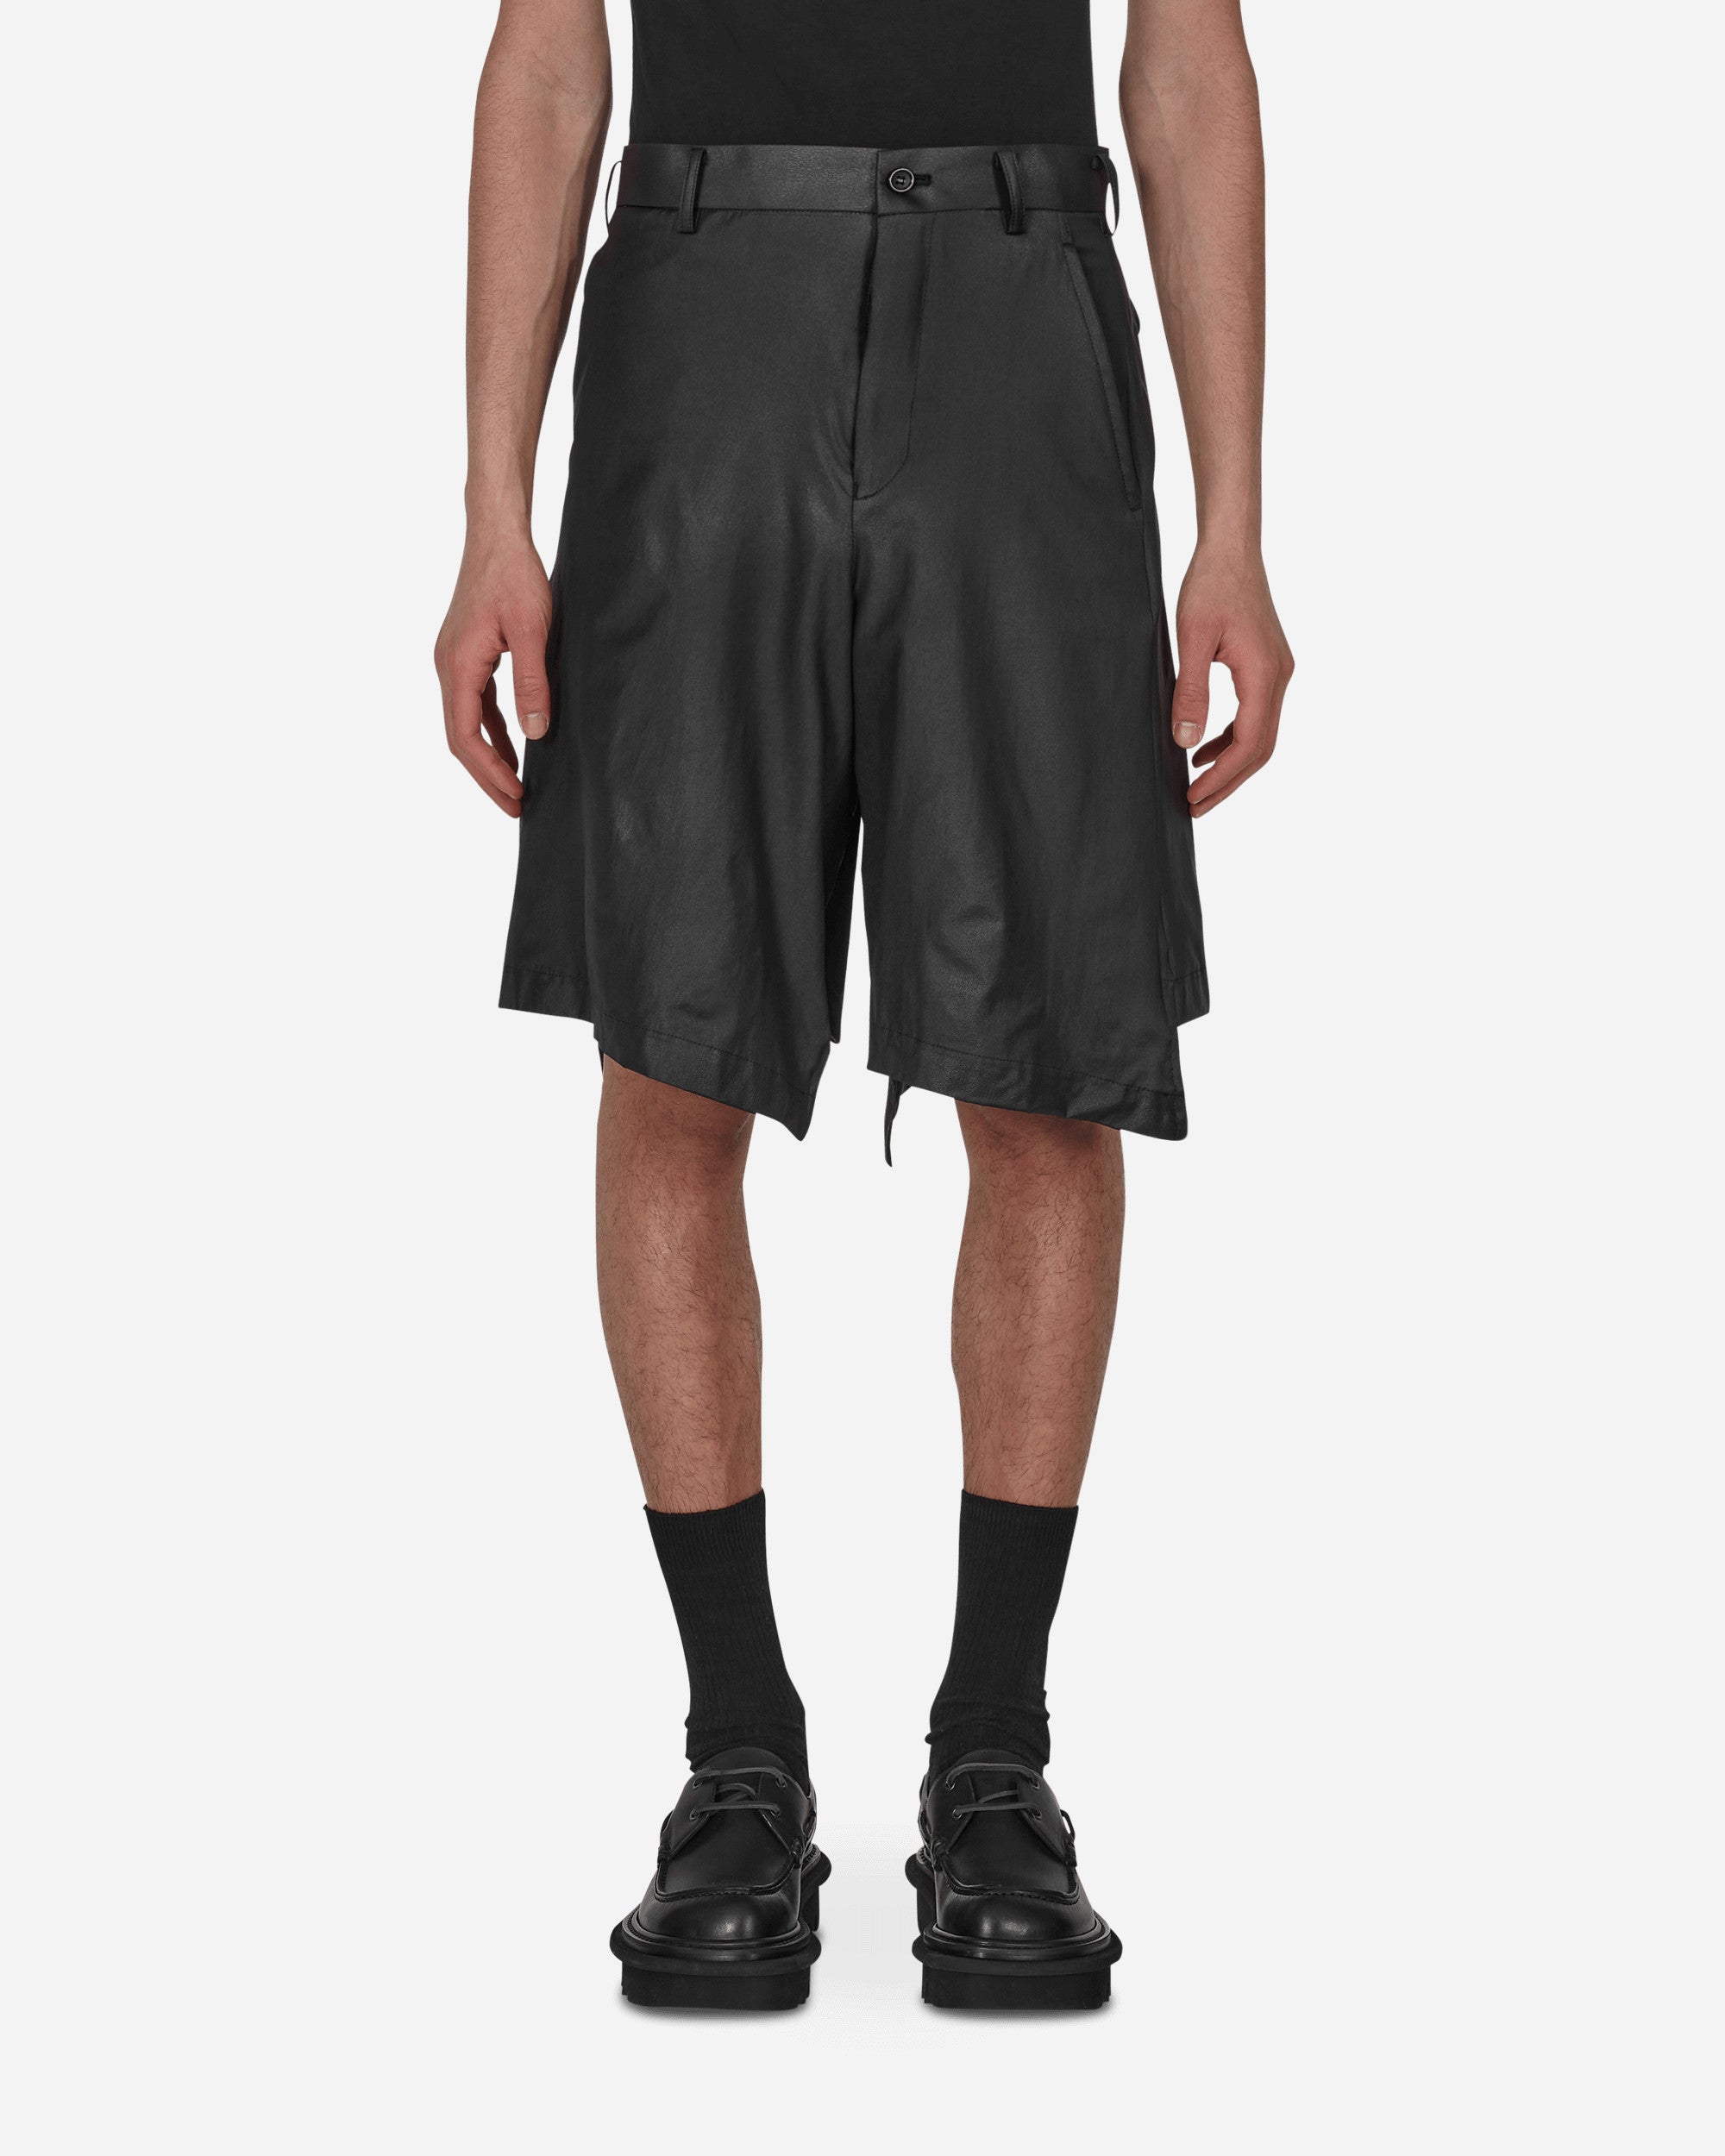 Asymmetrical Shorts Black